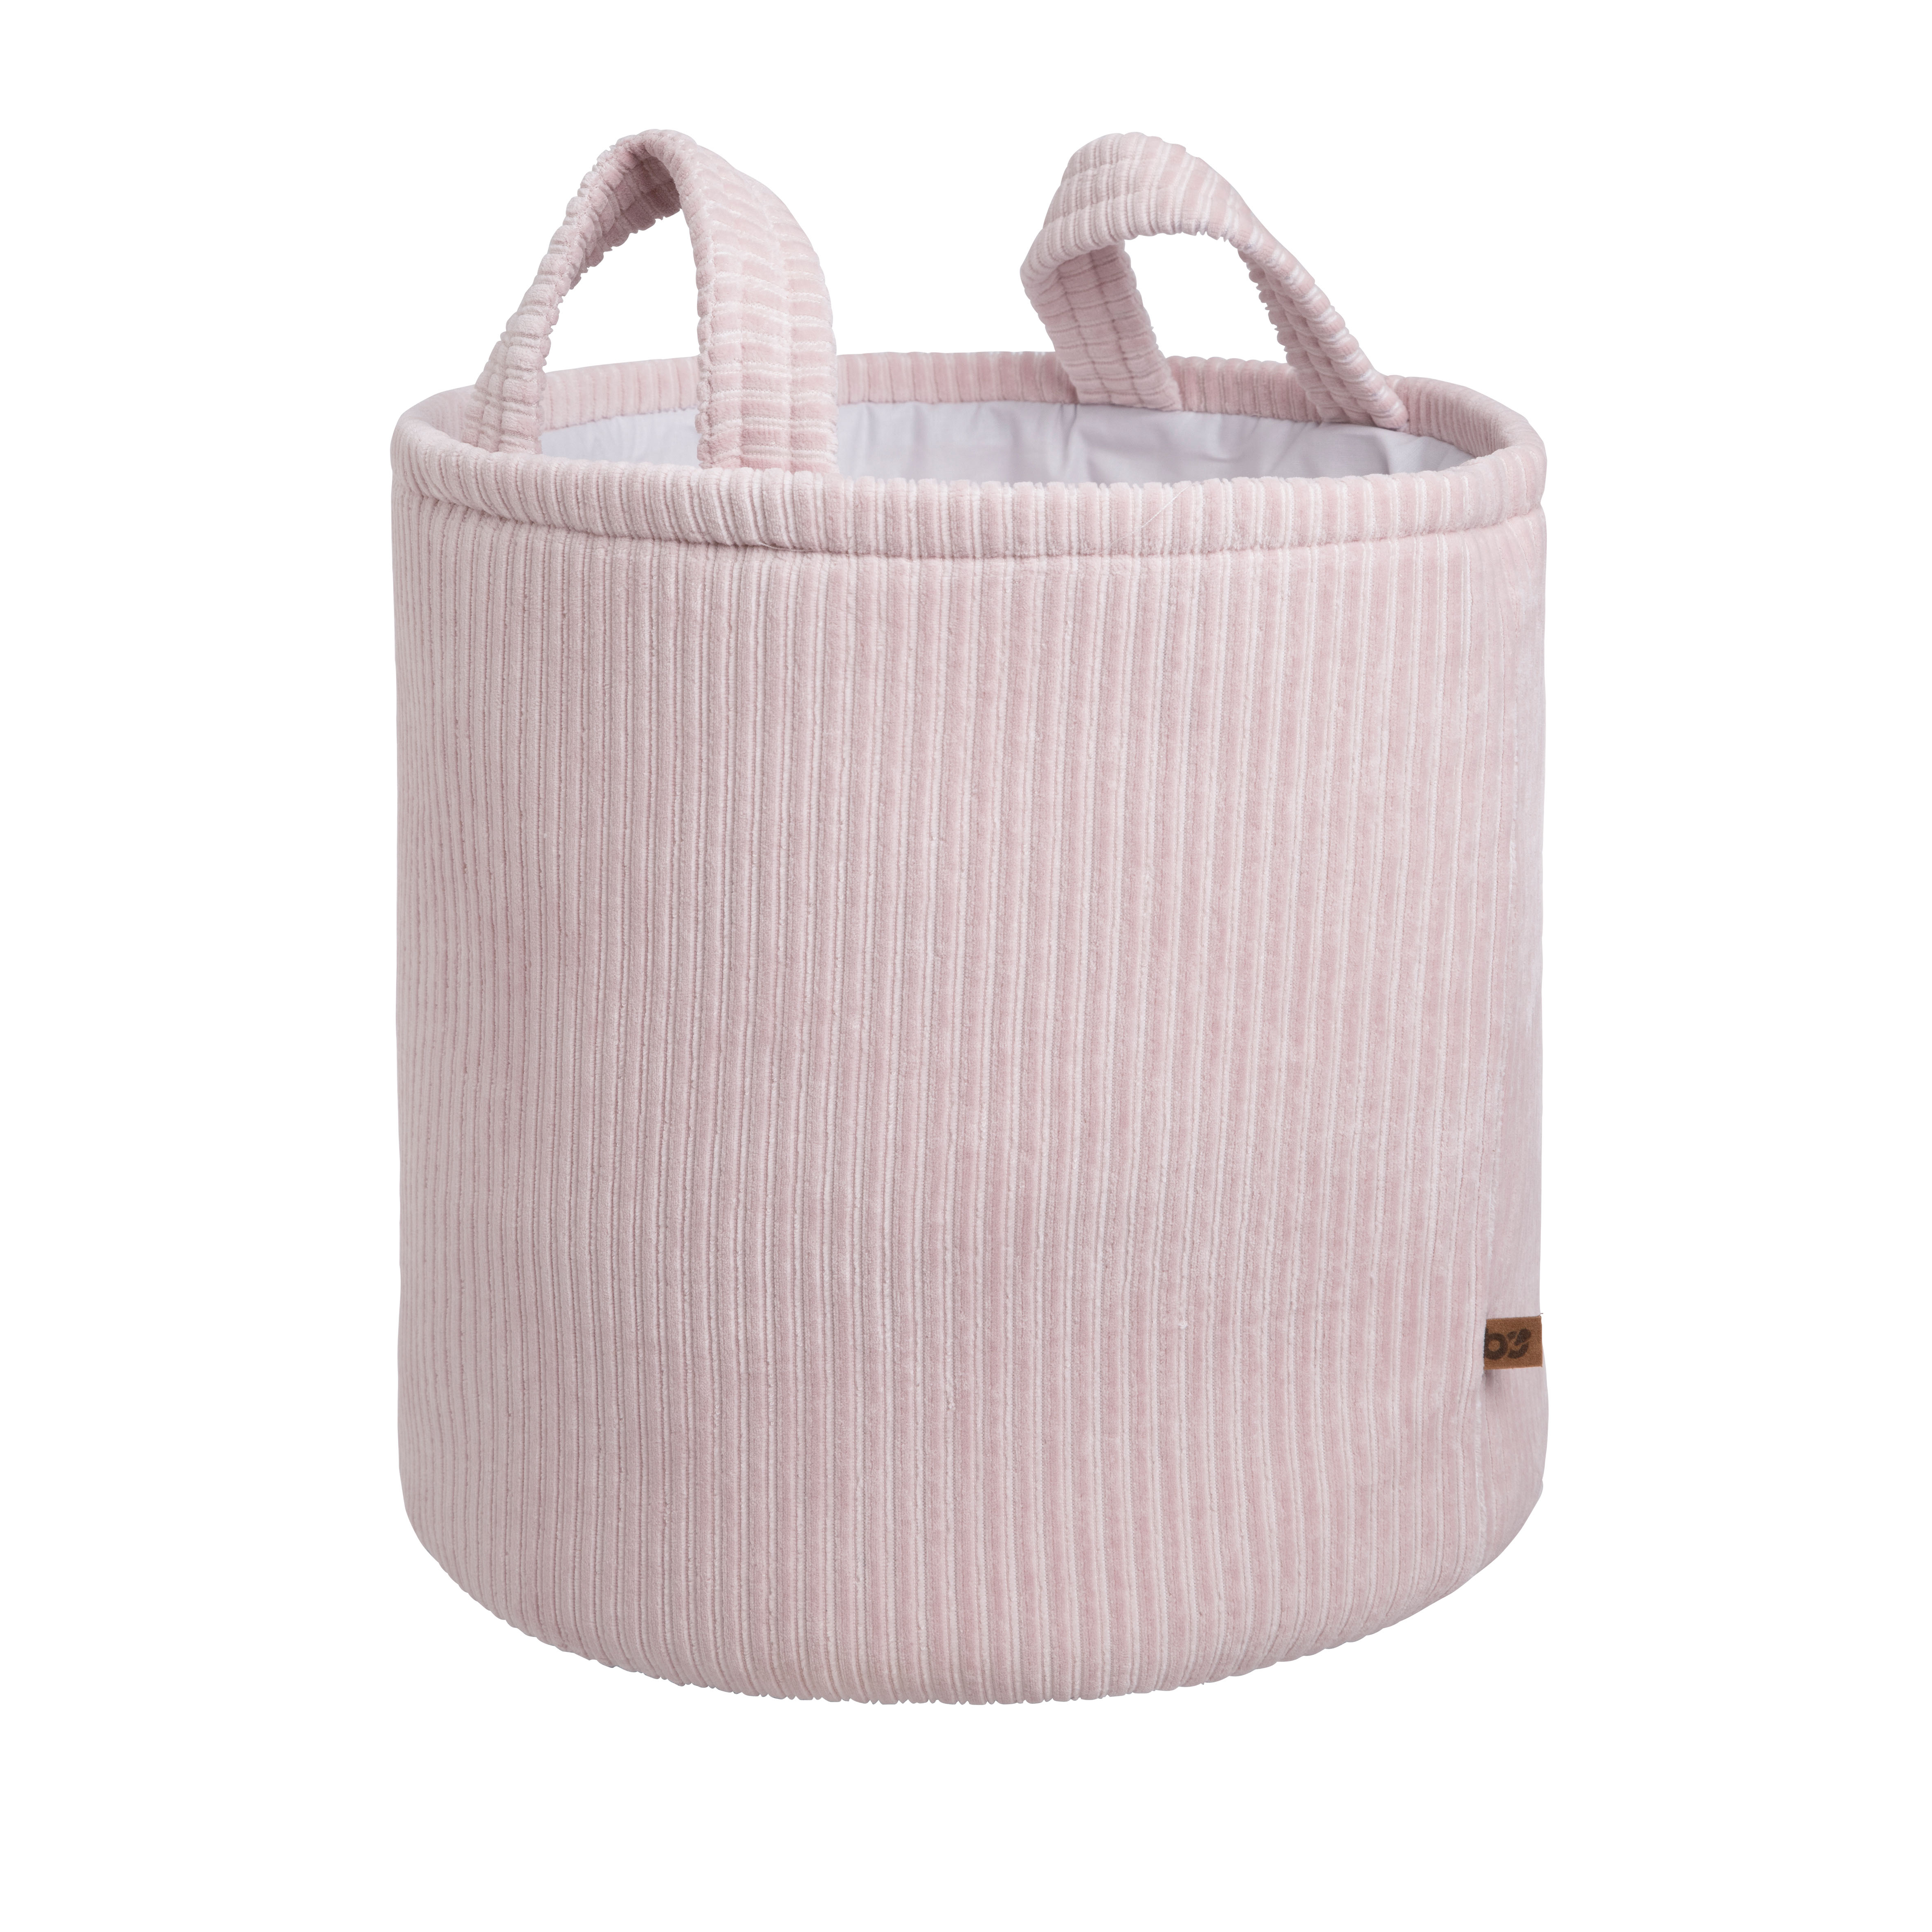 Storage basket Sense old pink - Ø38 cm